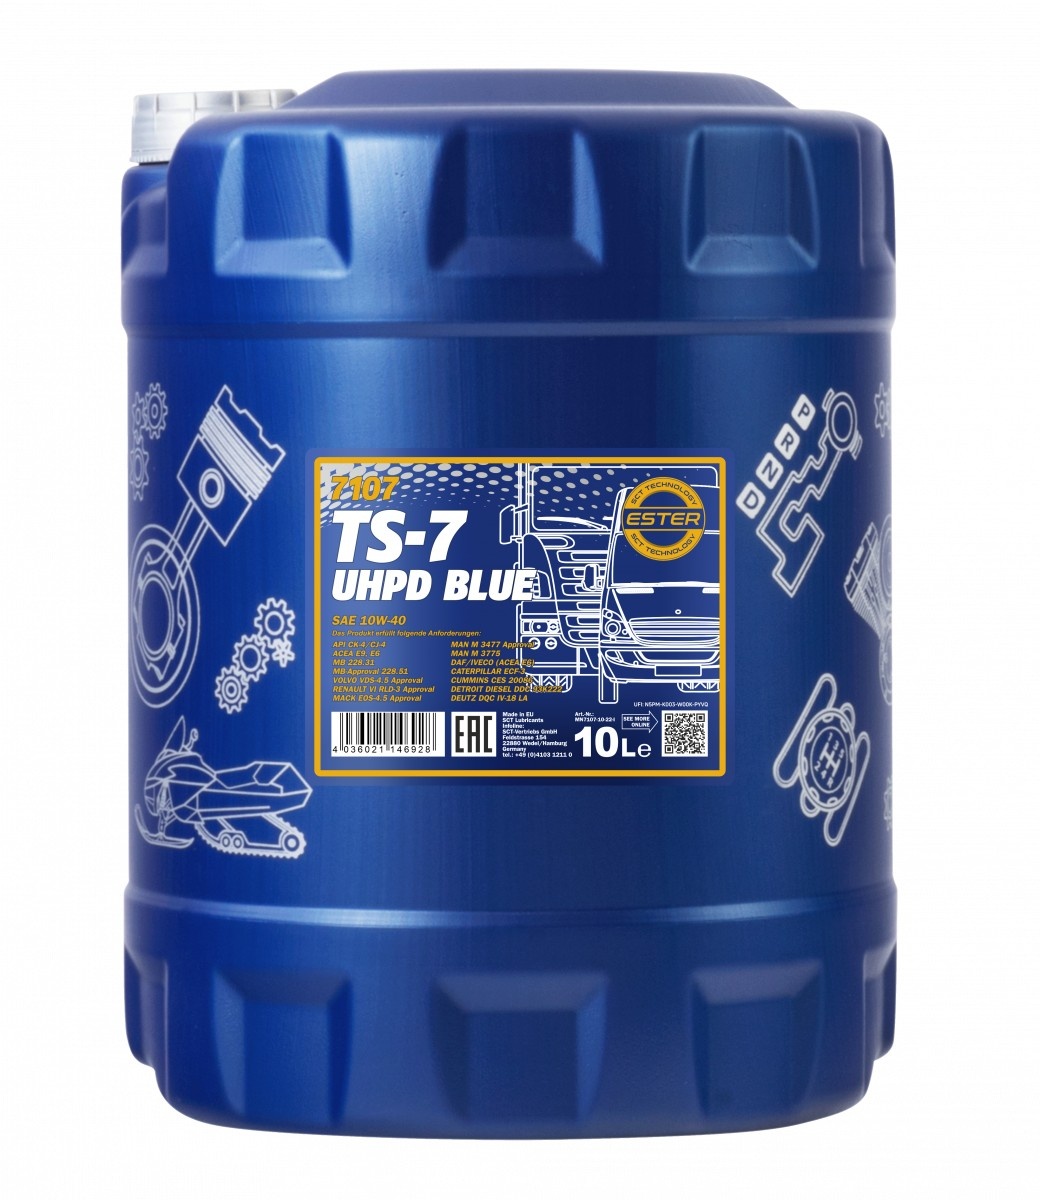 Ulei de motor Mannol TS-7 Blue UHPD 10W-40 7107 10L